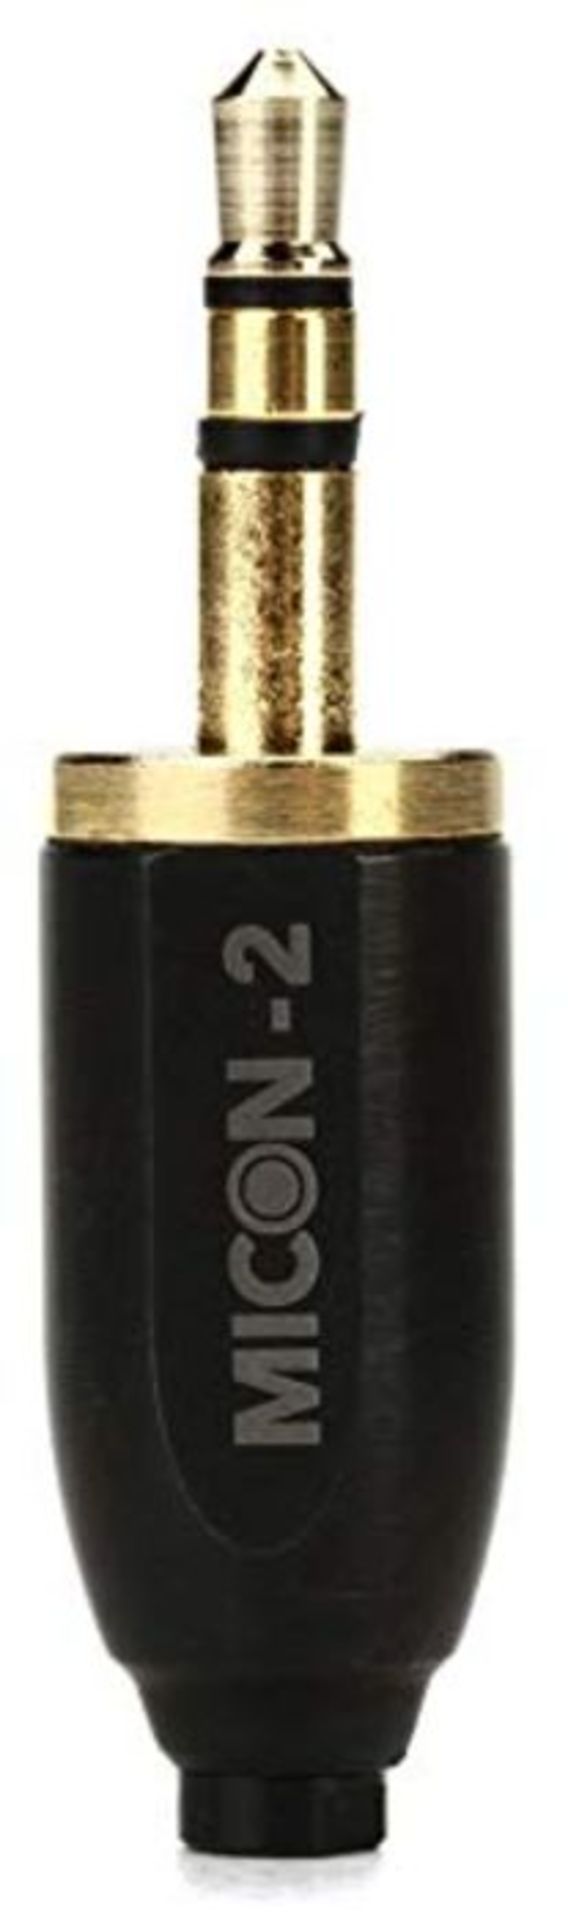 Rode MiCon-2 Adaptor (3.5mm Stereo Minijack fitting, 1V minimum power supply)